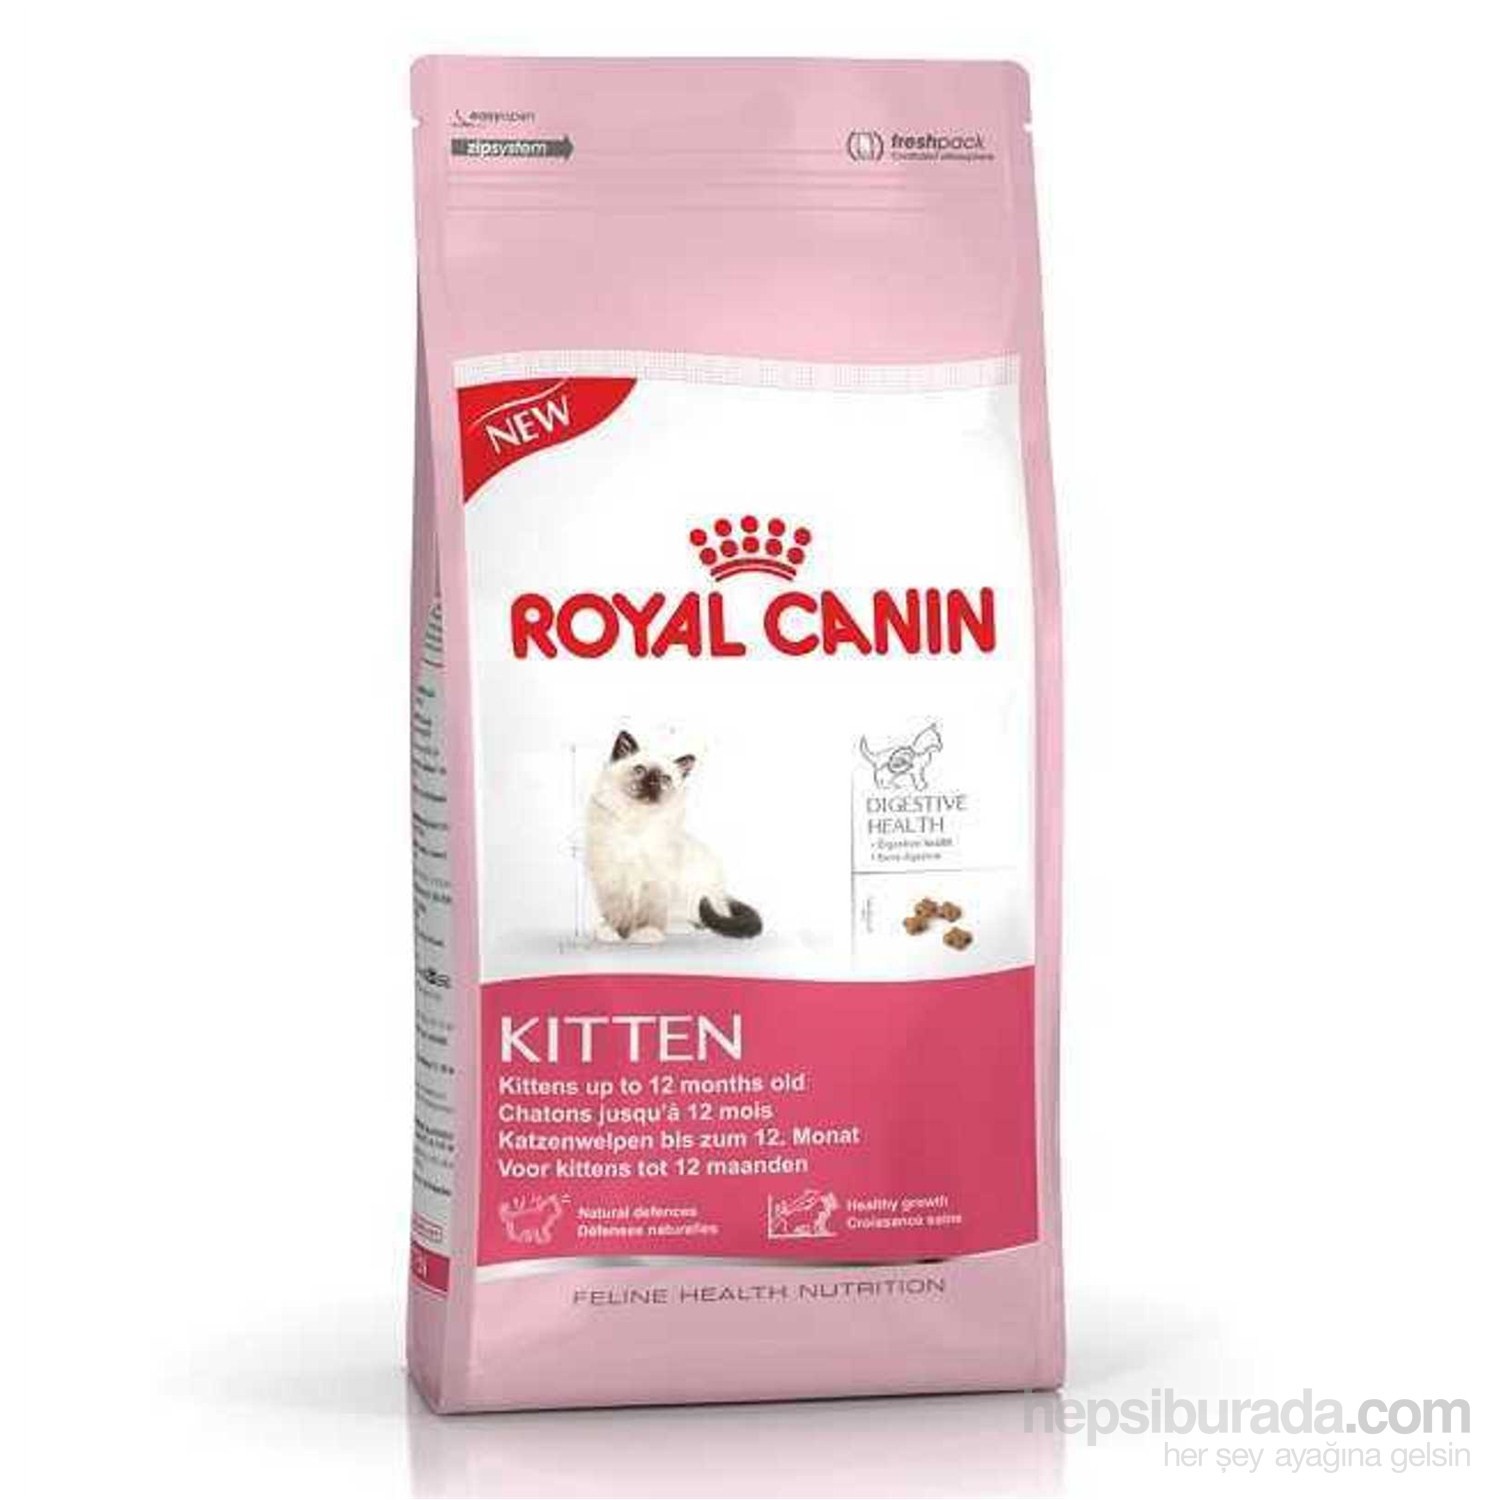 Royal Canin 36 Kitten Yavru Kuru Kedi Maması 4 kg Fiyatı